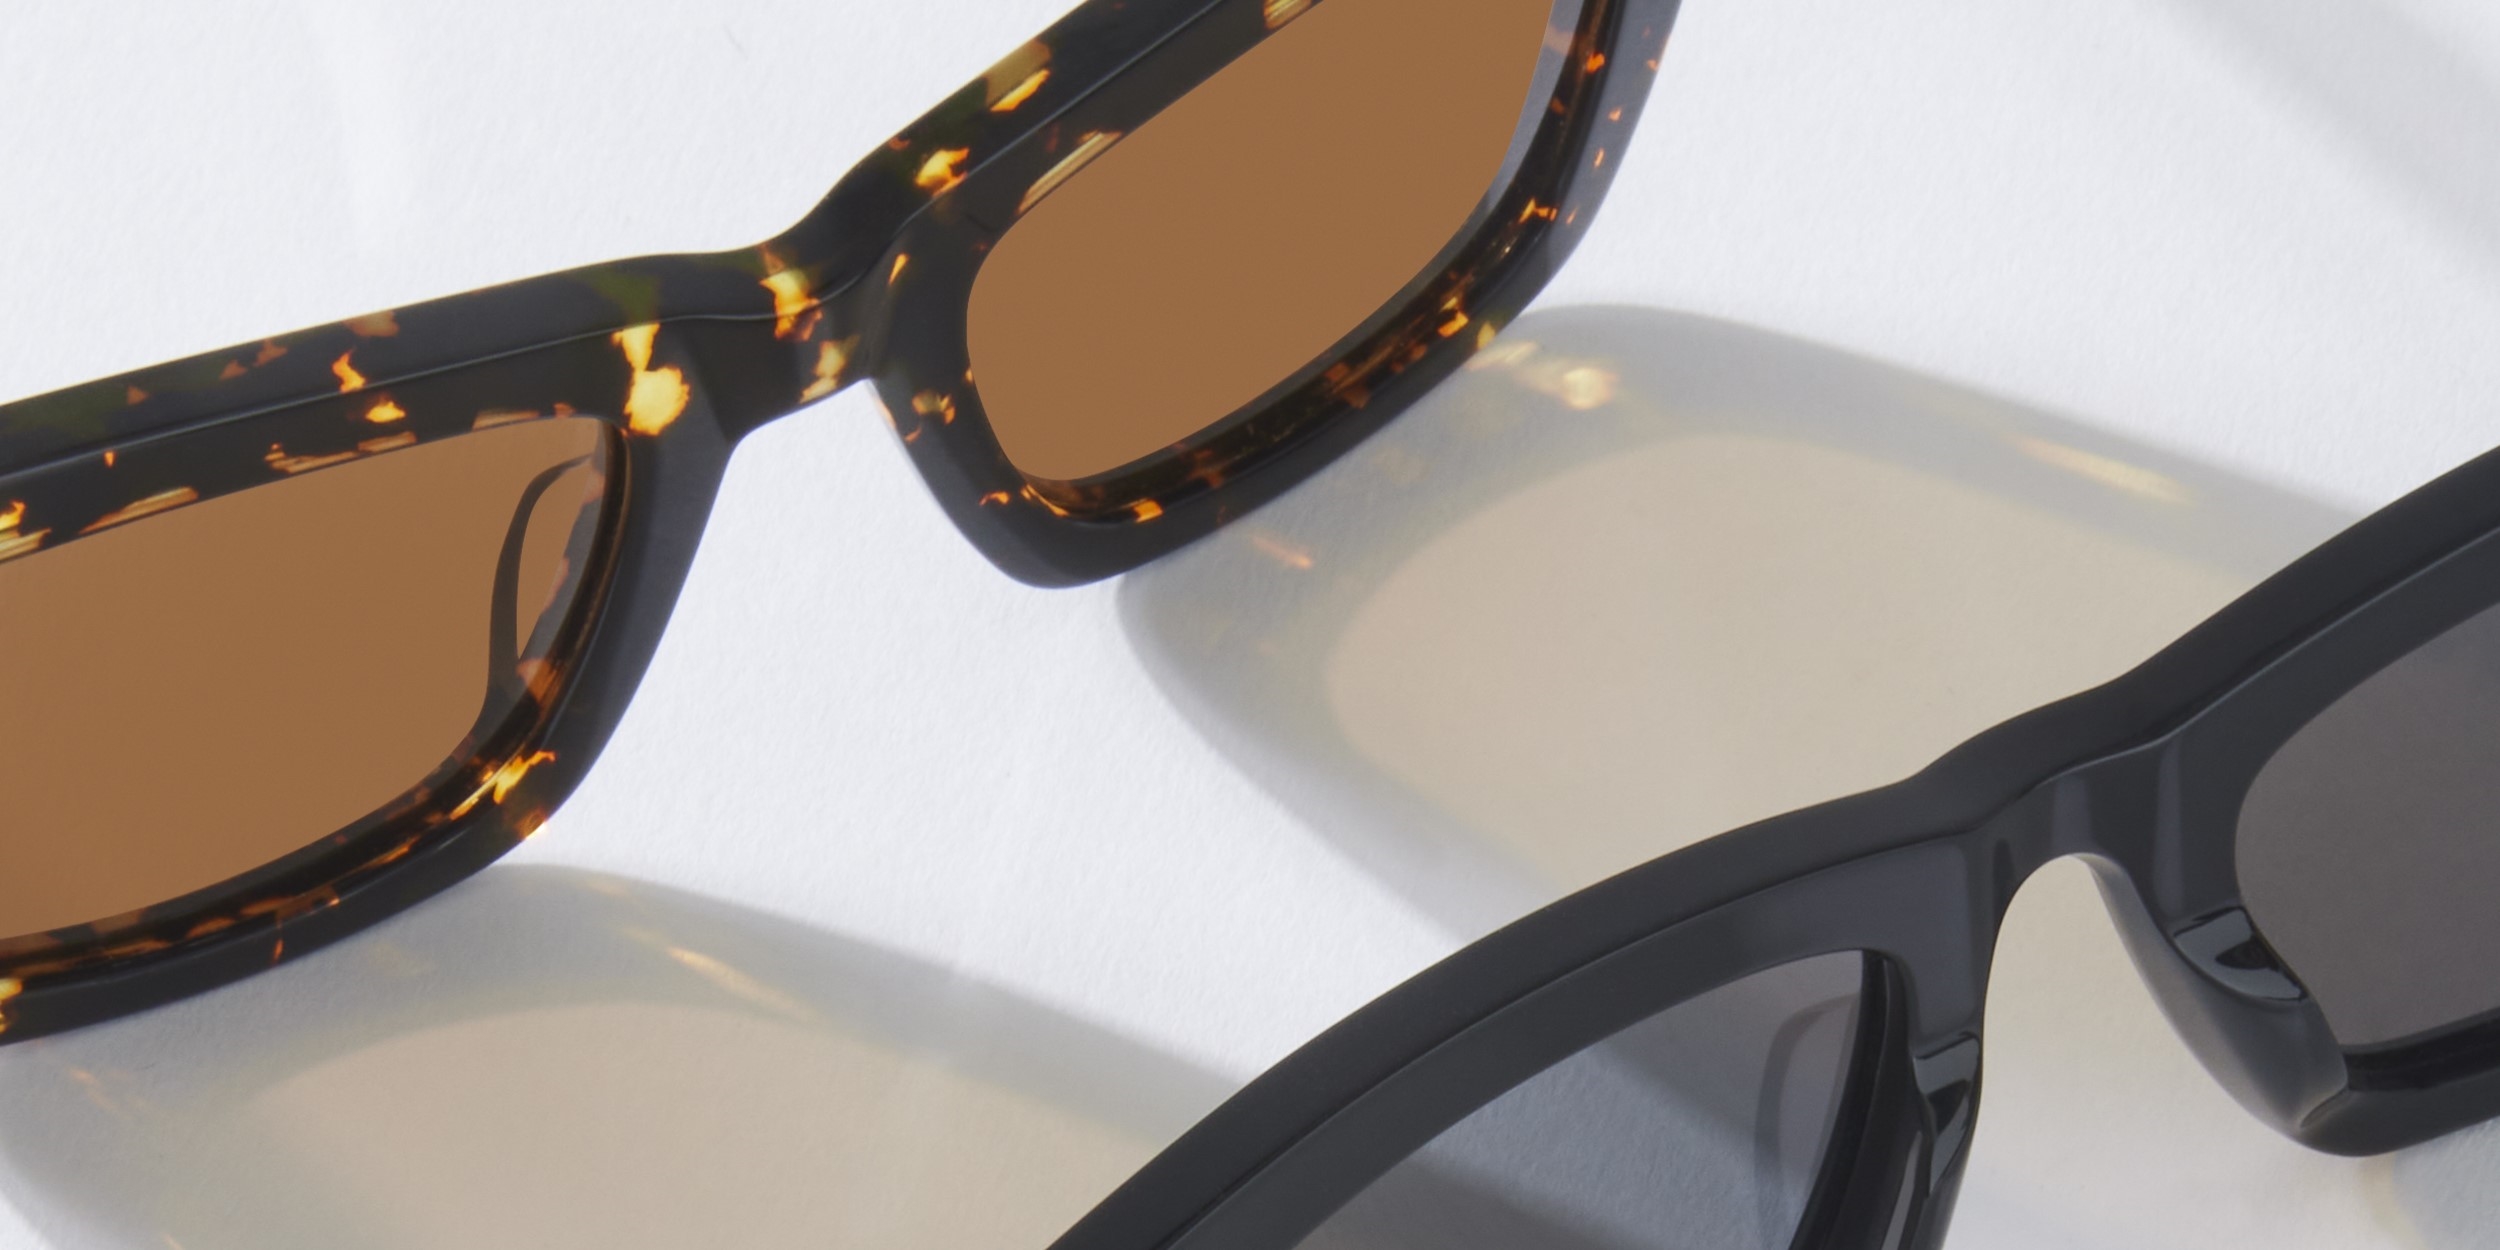 Photo Details of Manu Sun Black Sun Glasses in a room